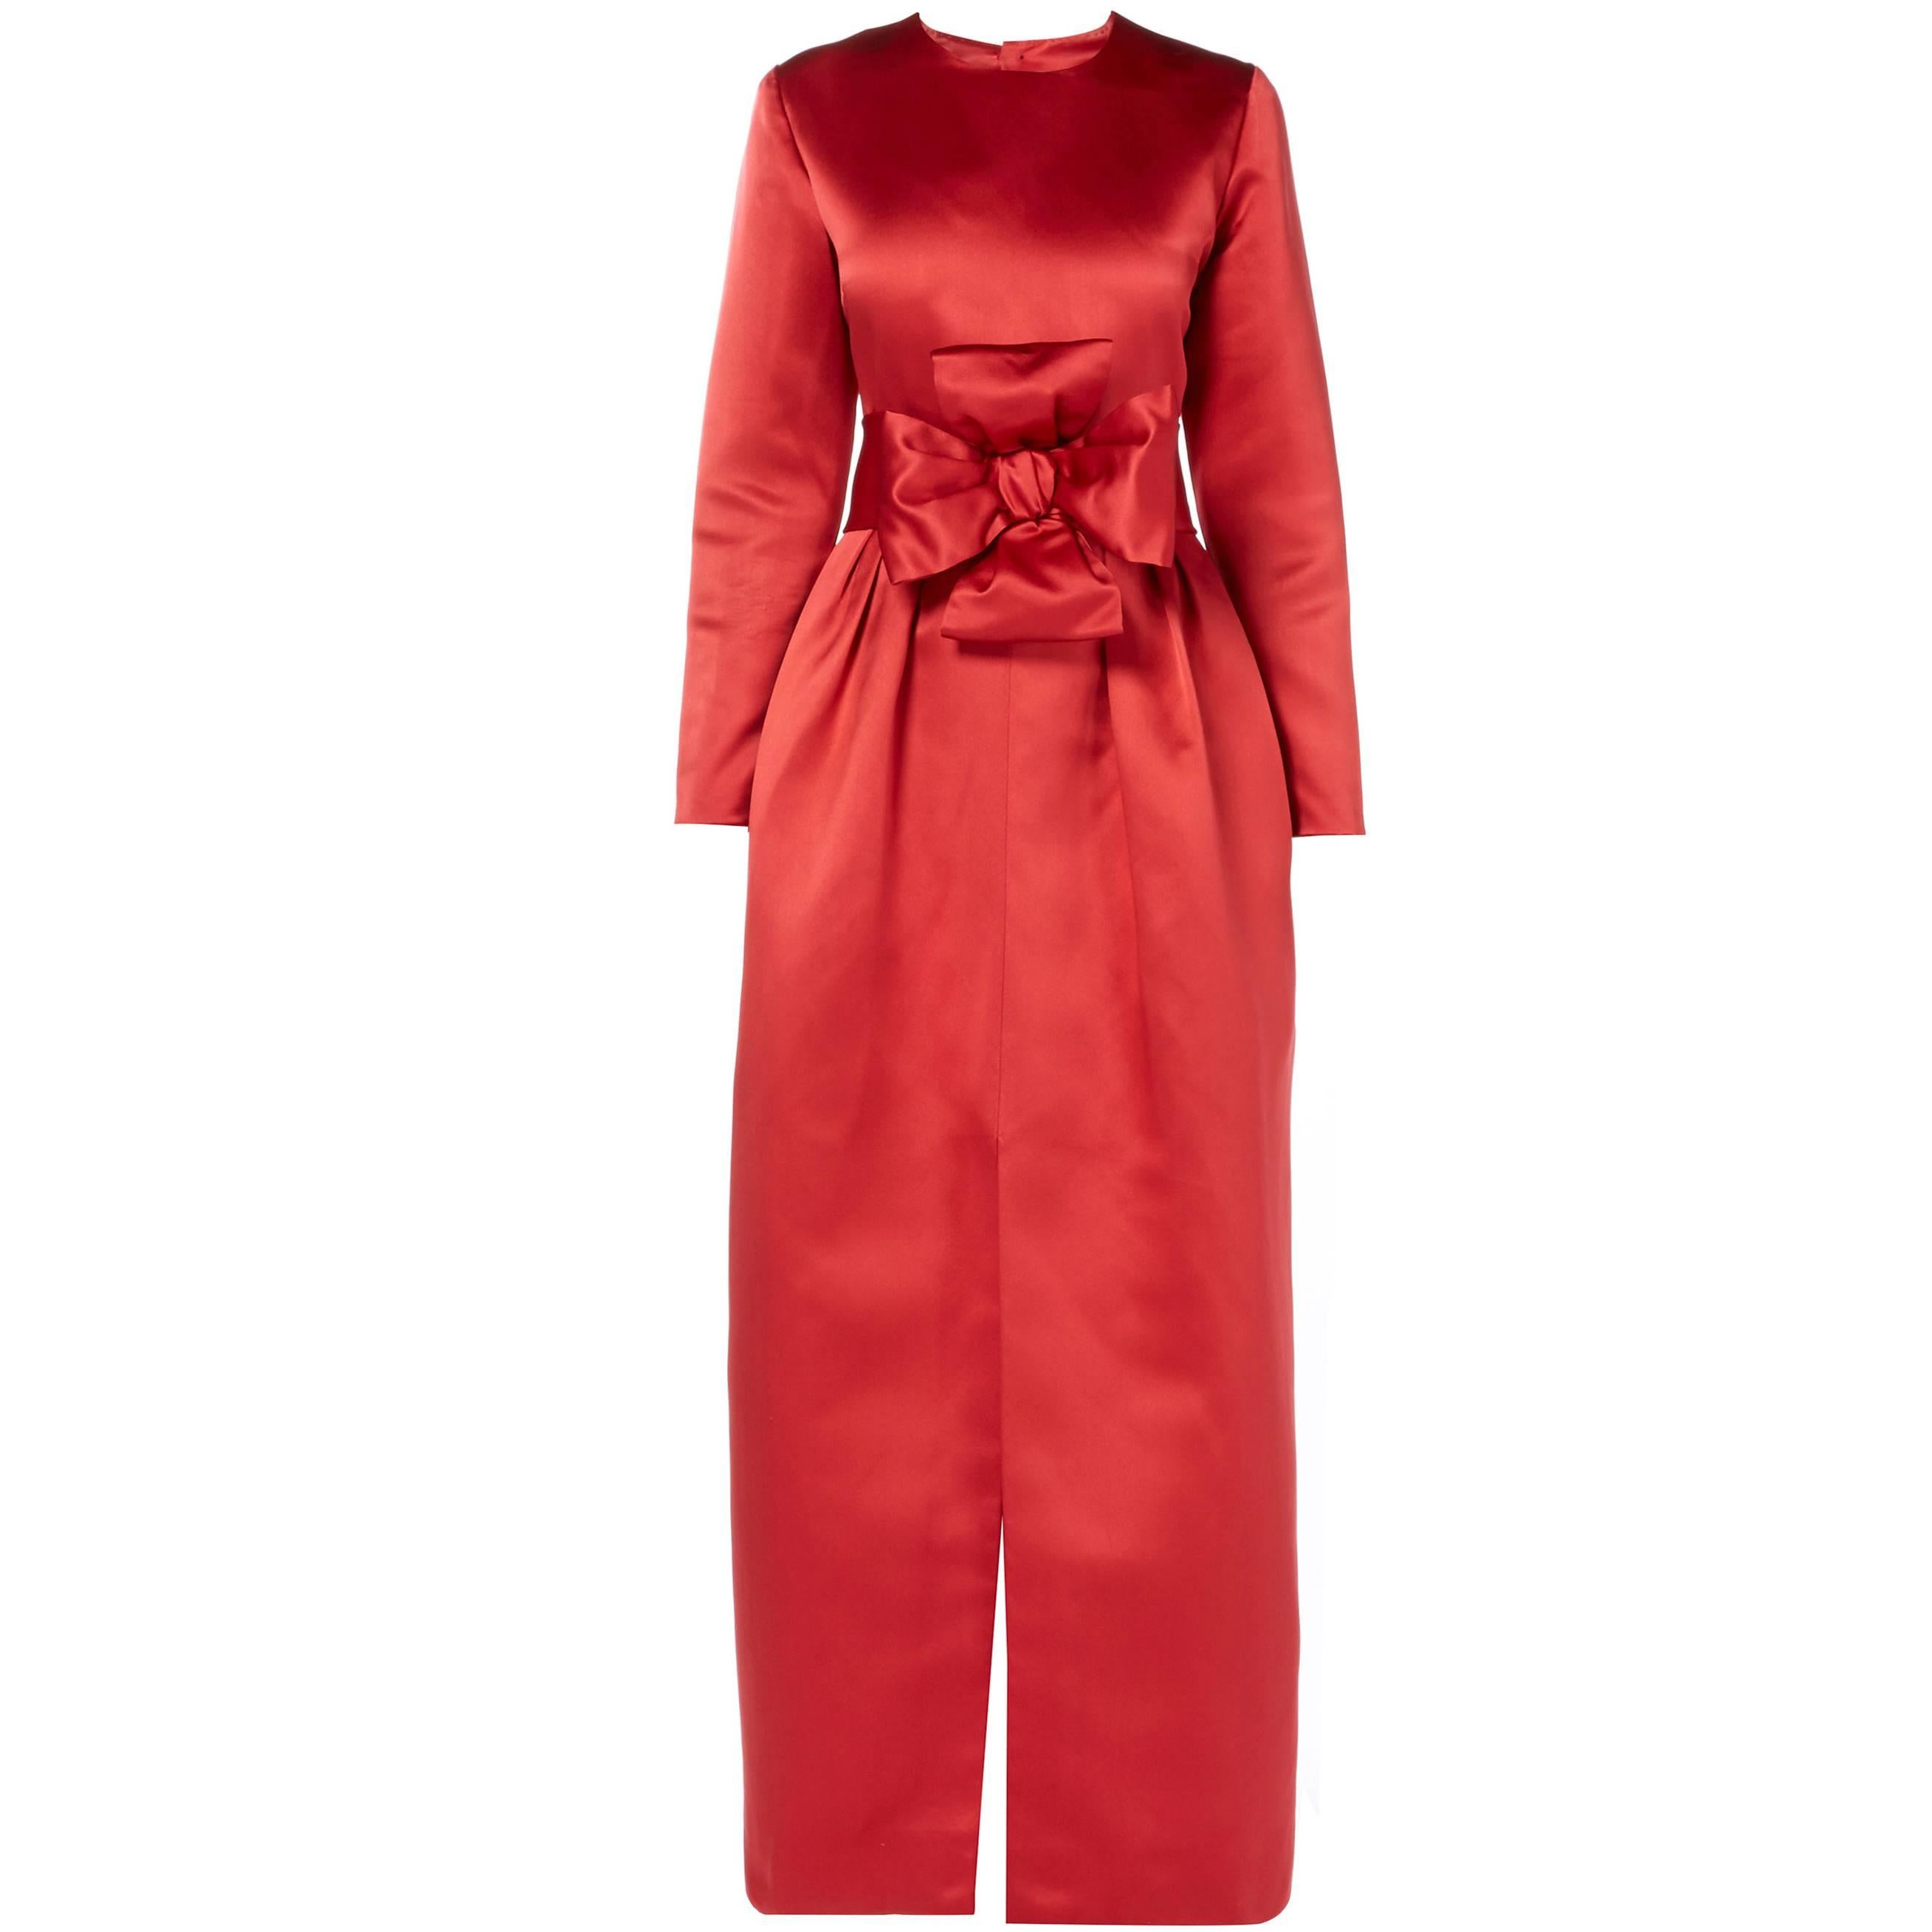 Dior haute couture red dress, Autumn/Winter 1979